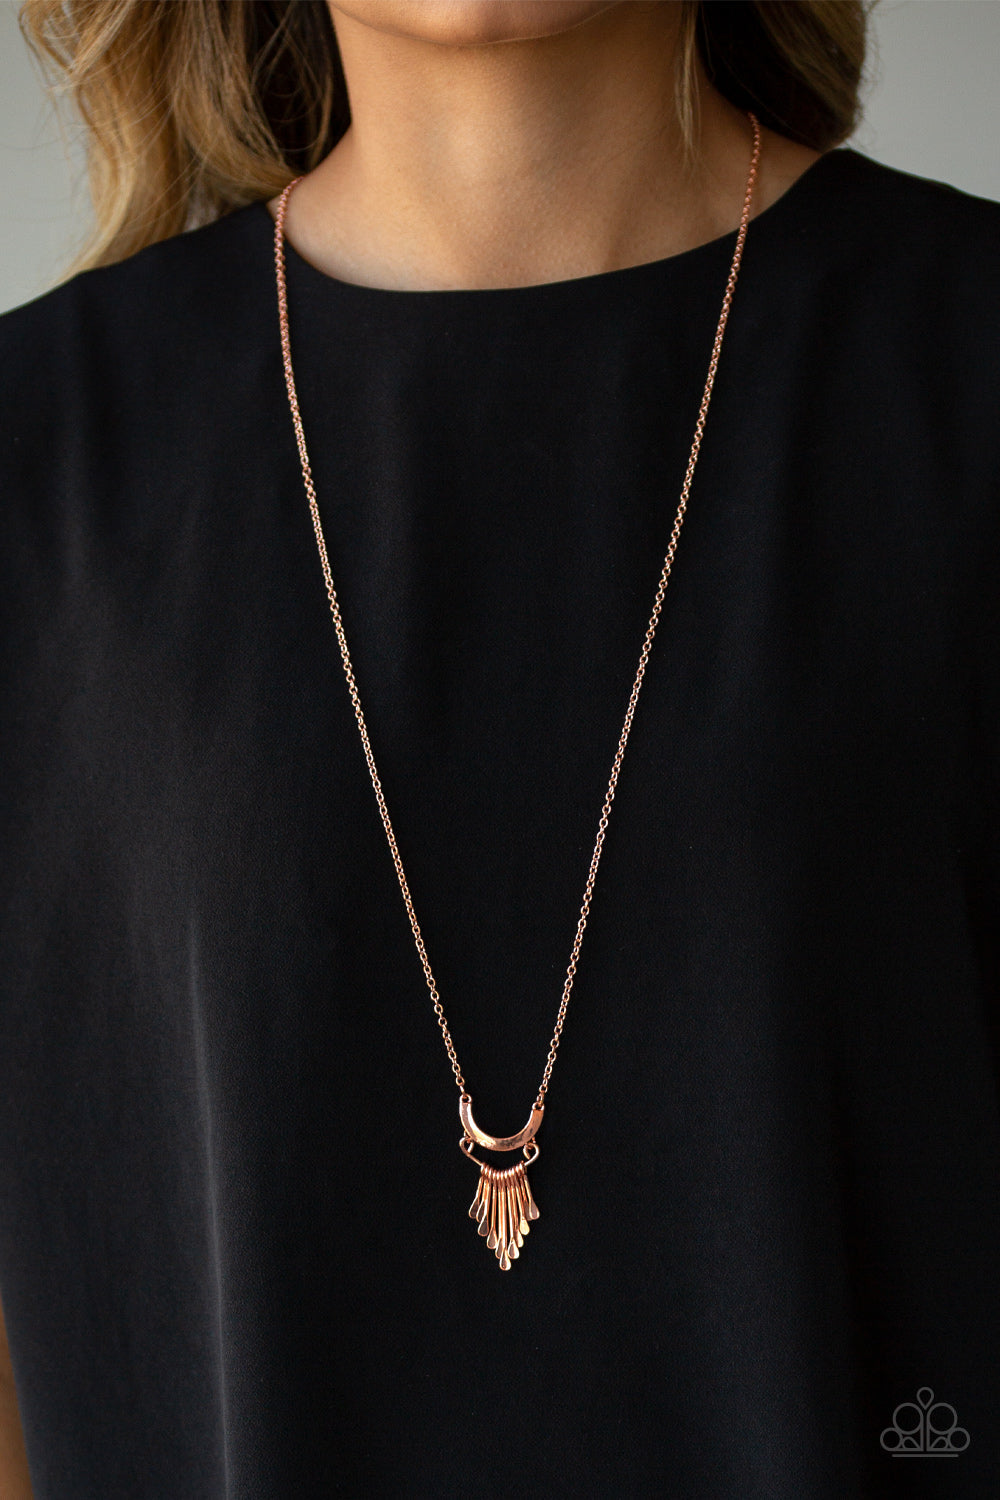 Paparazzi Trendsetting Trinket - Copper - Necklace & Earrings - $5 Jewelry with Ashley Swint